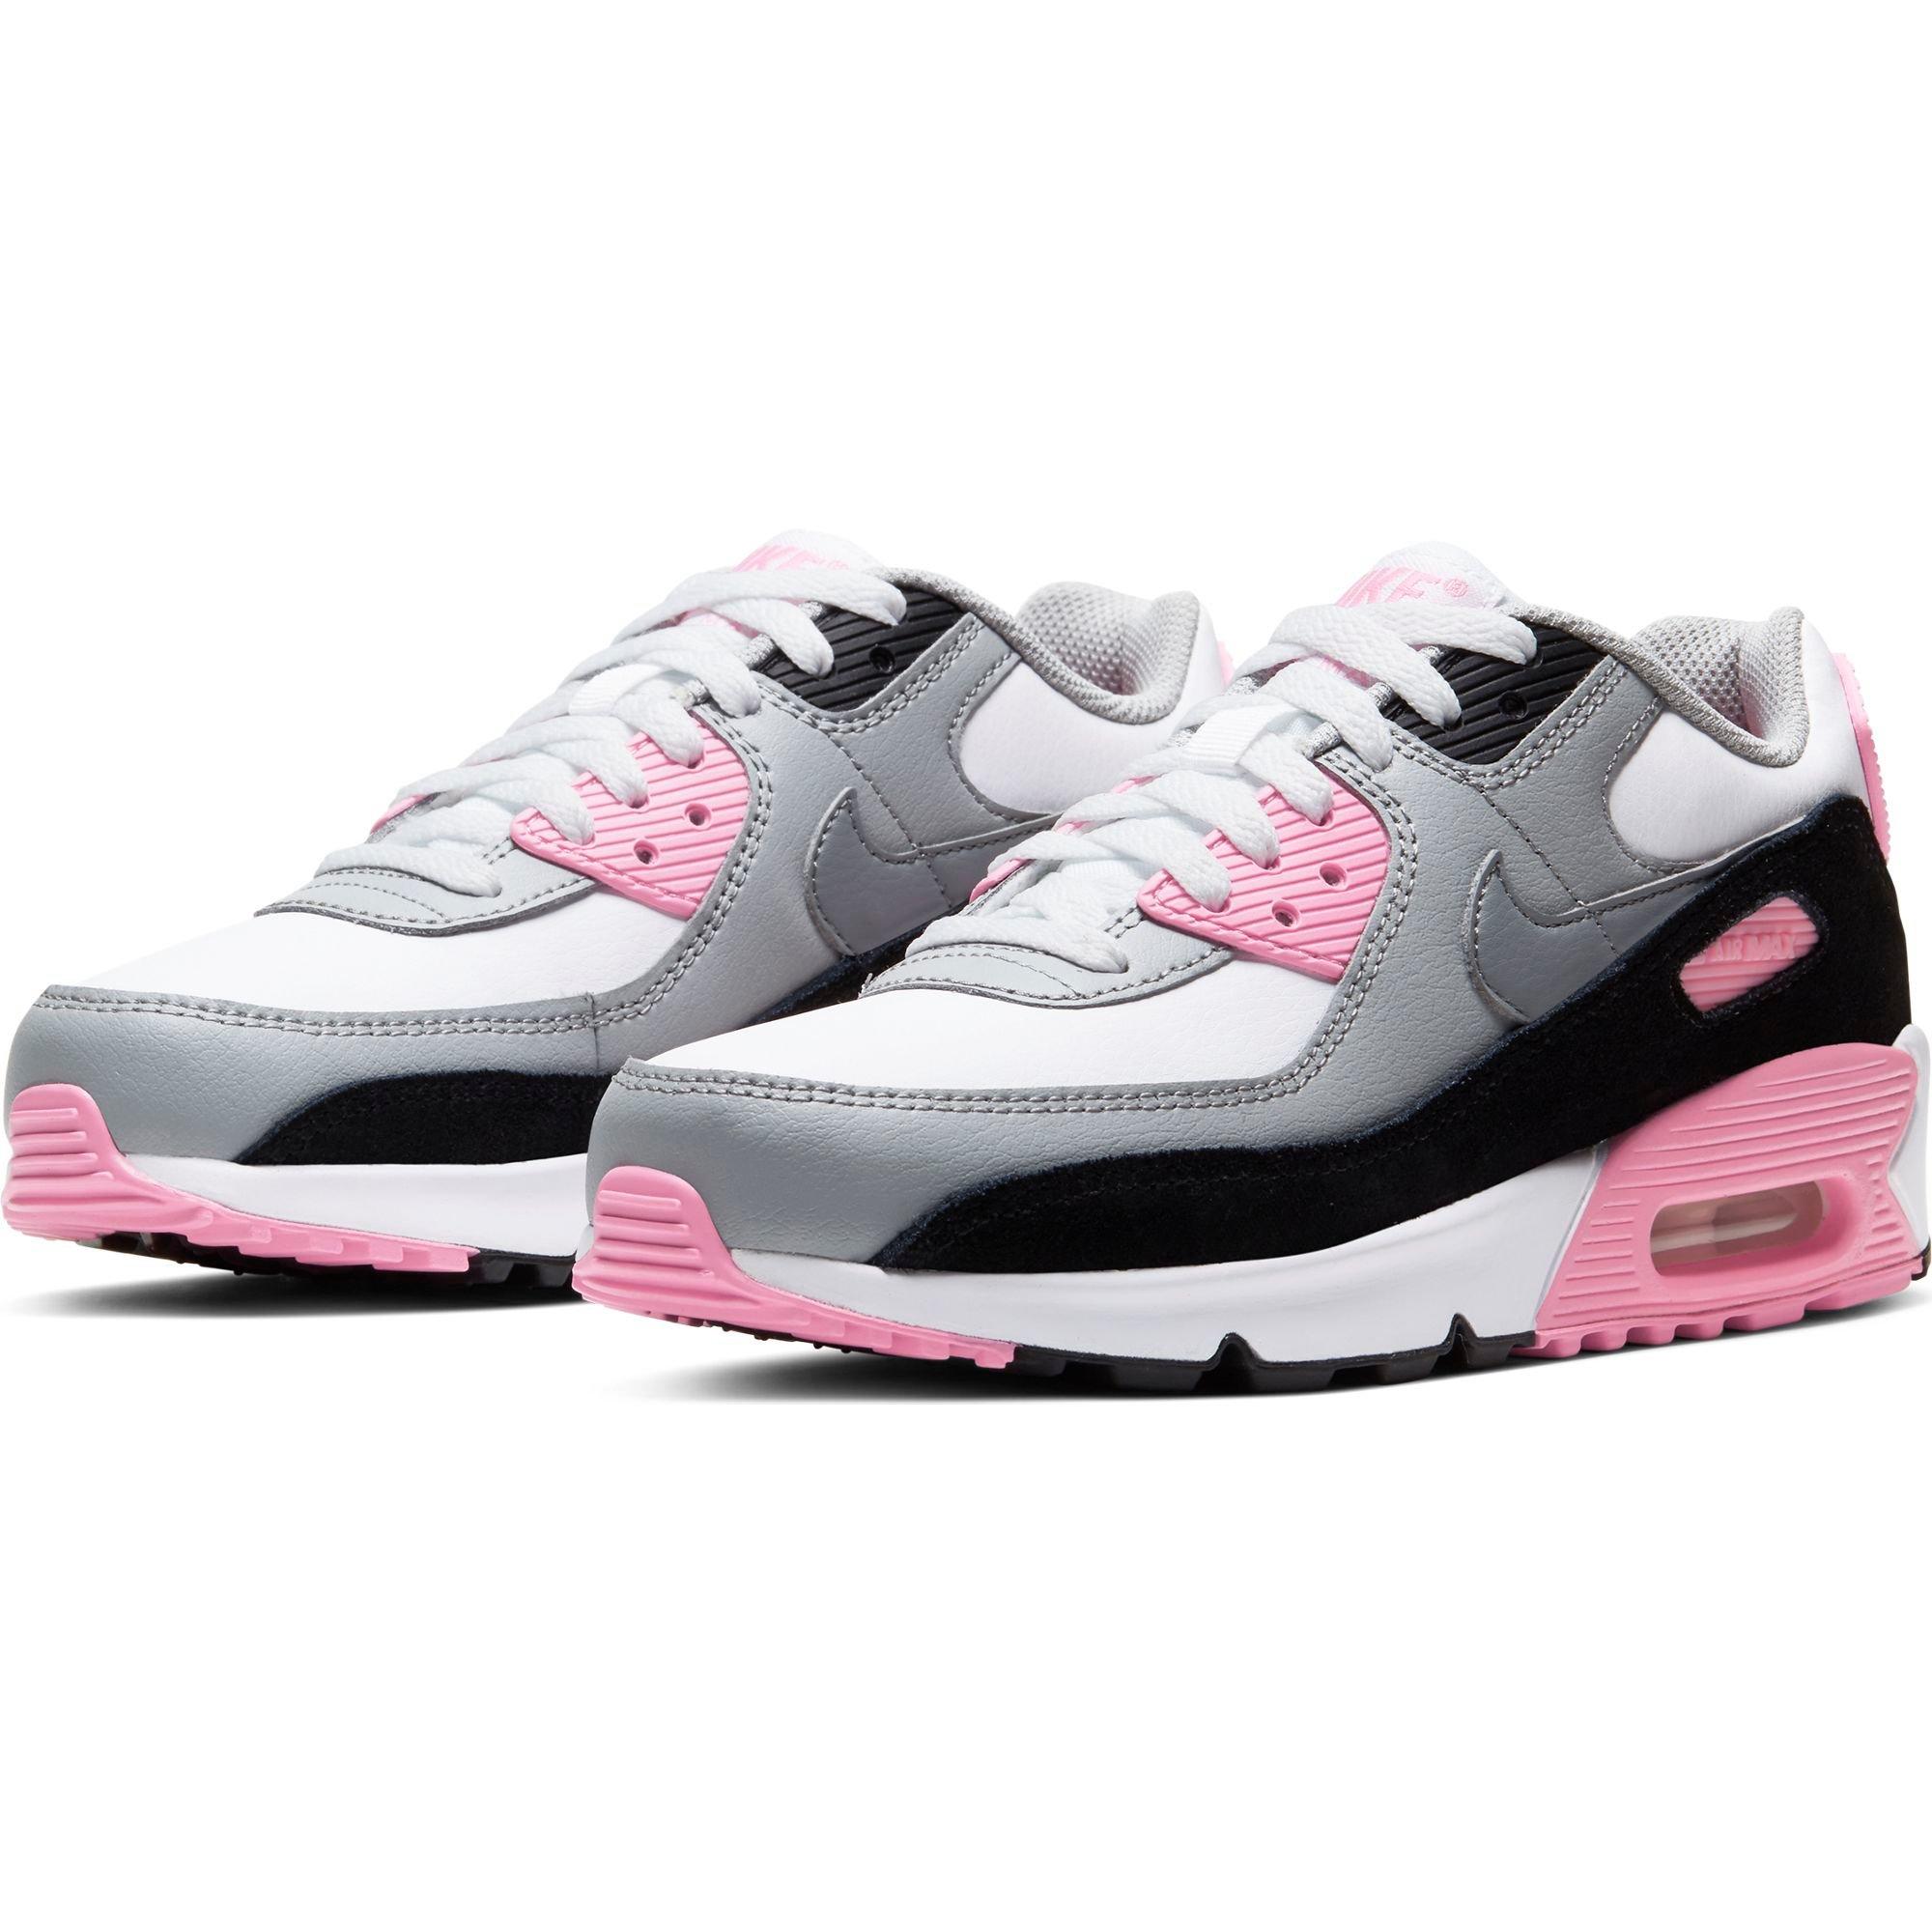 nike air max 90 pink grey white